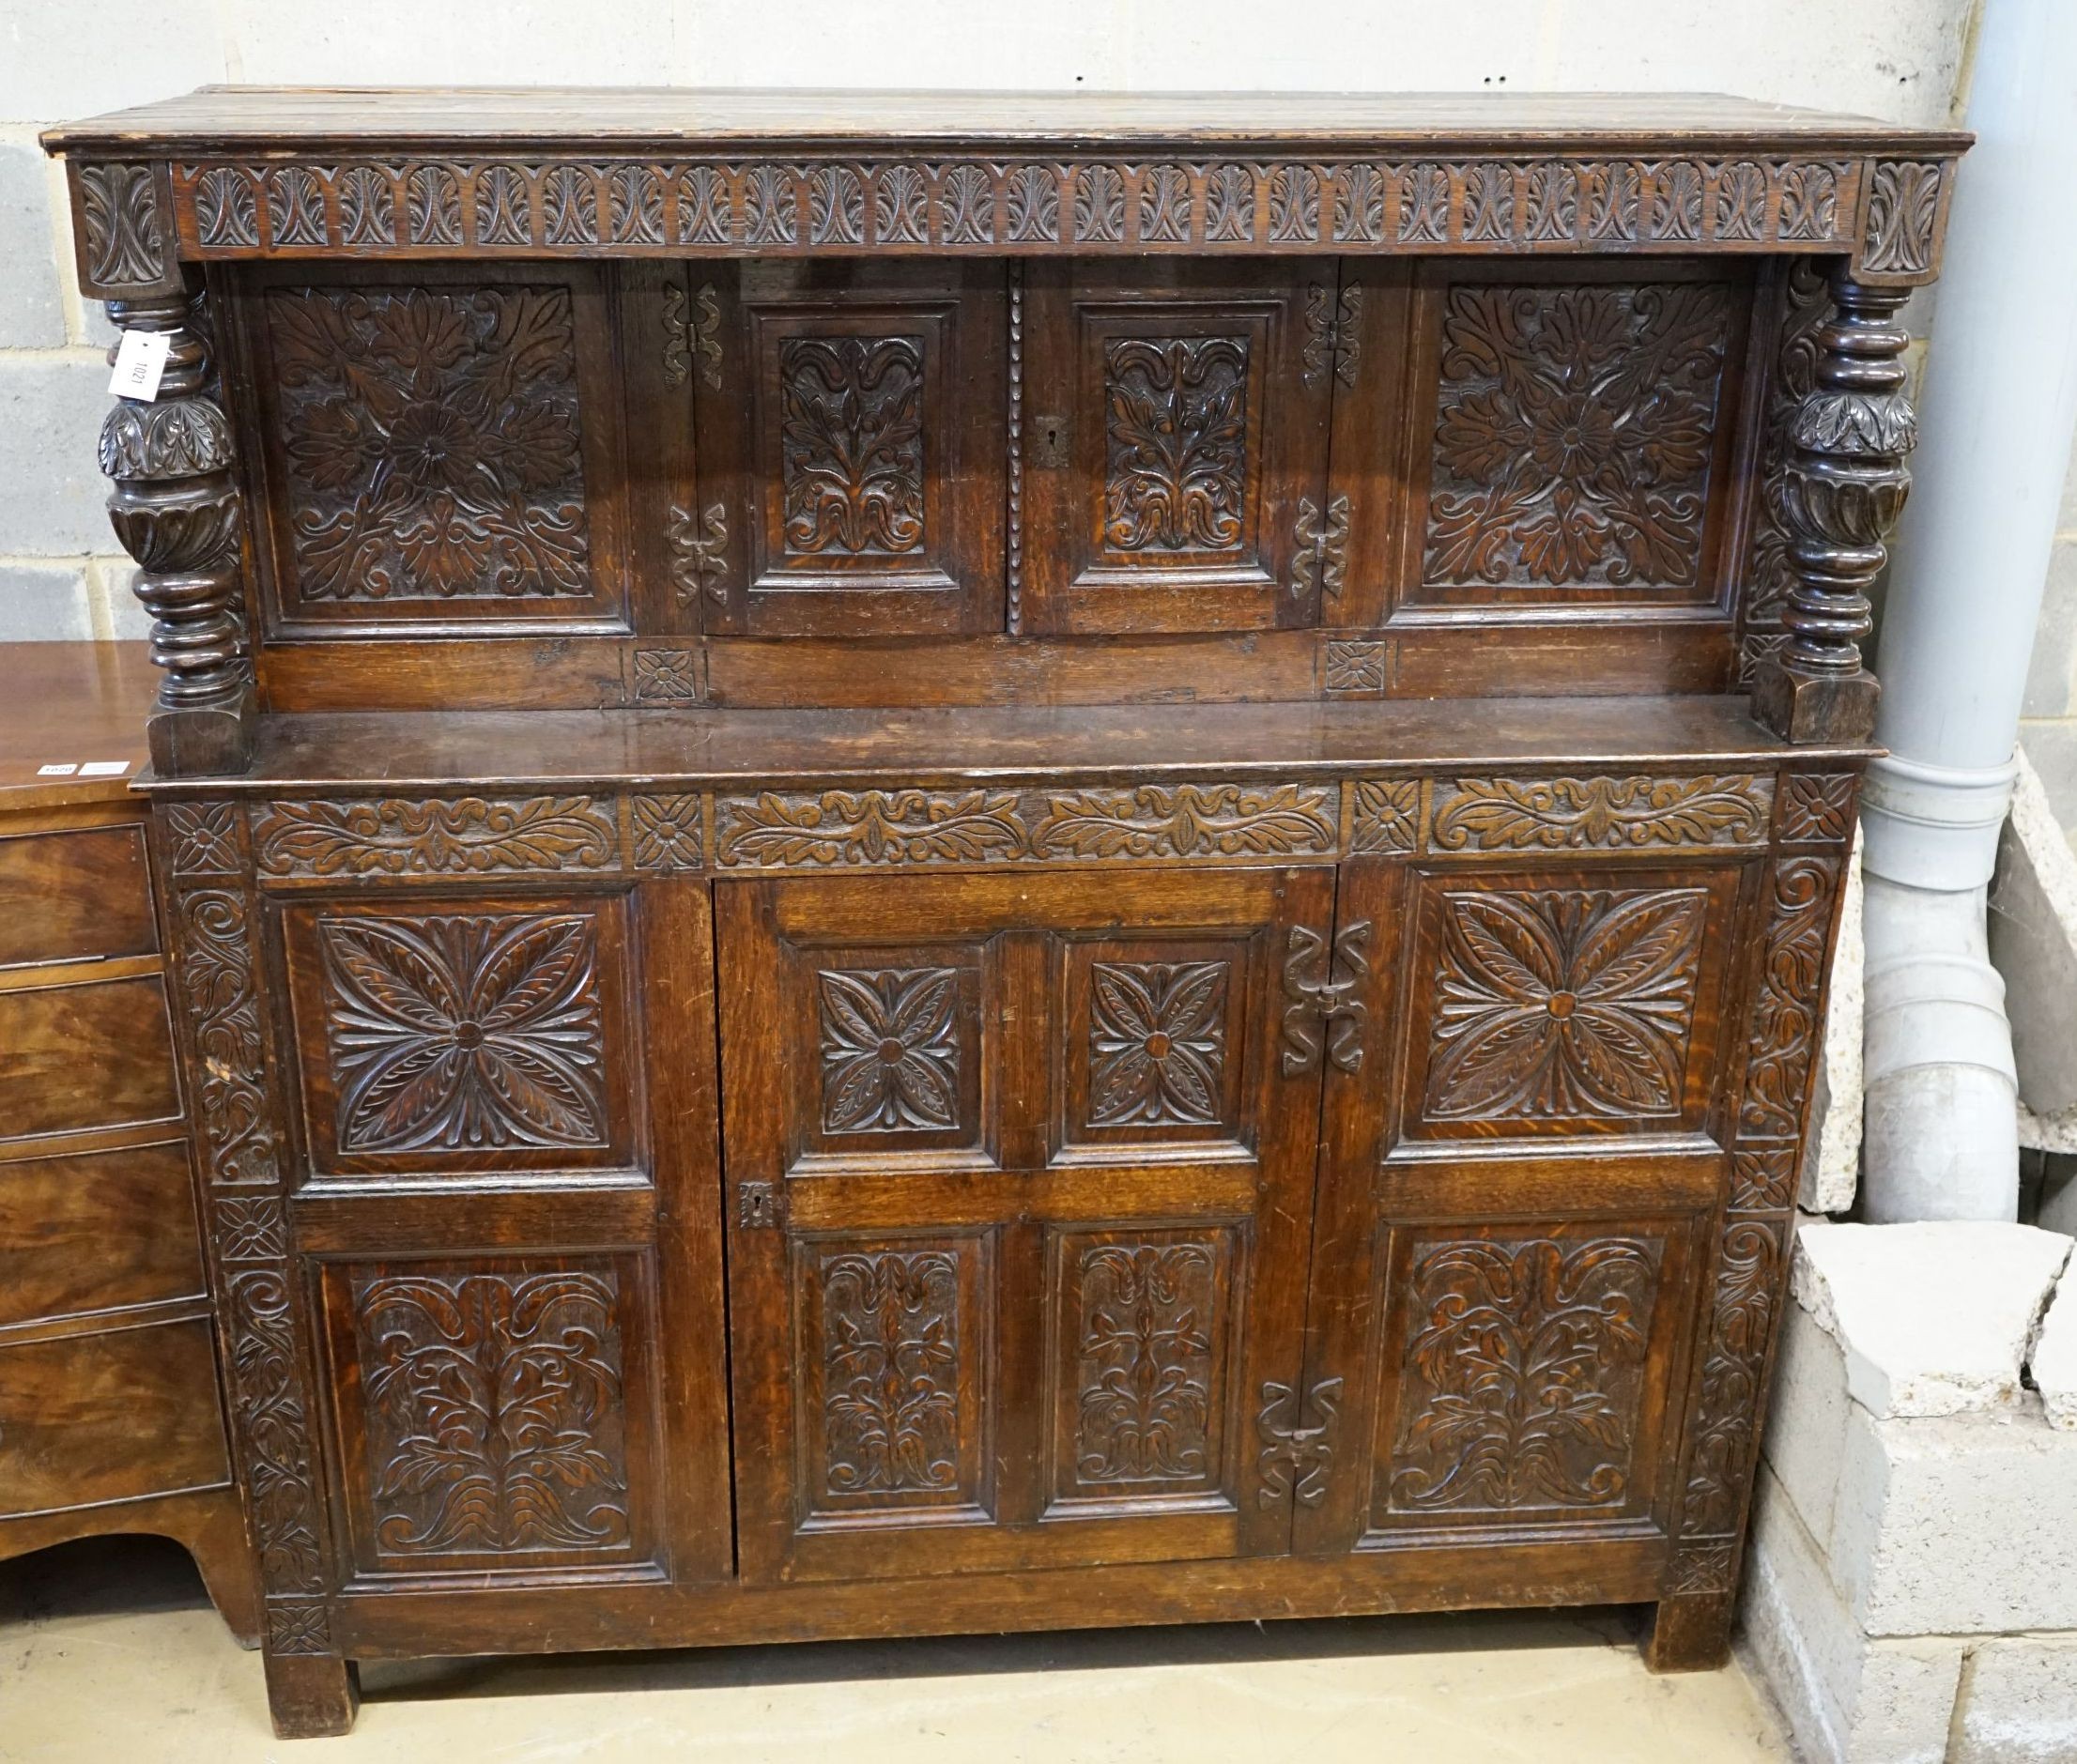 An 18th century style carved oak court cupboard, width 161cm, depth 54cm, height 164cm